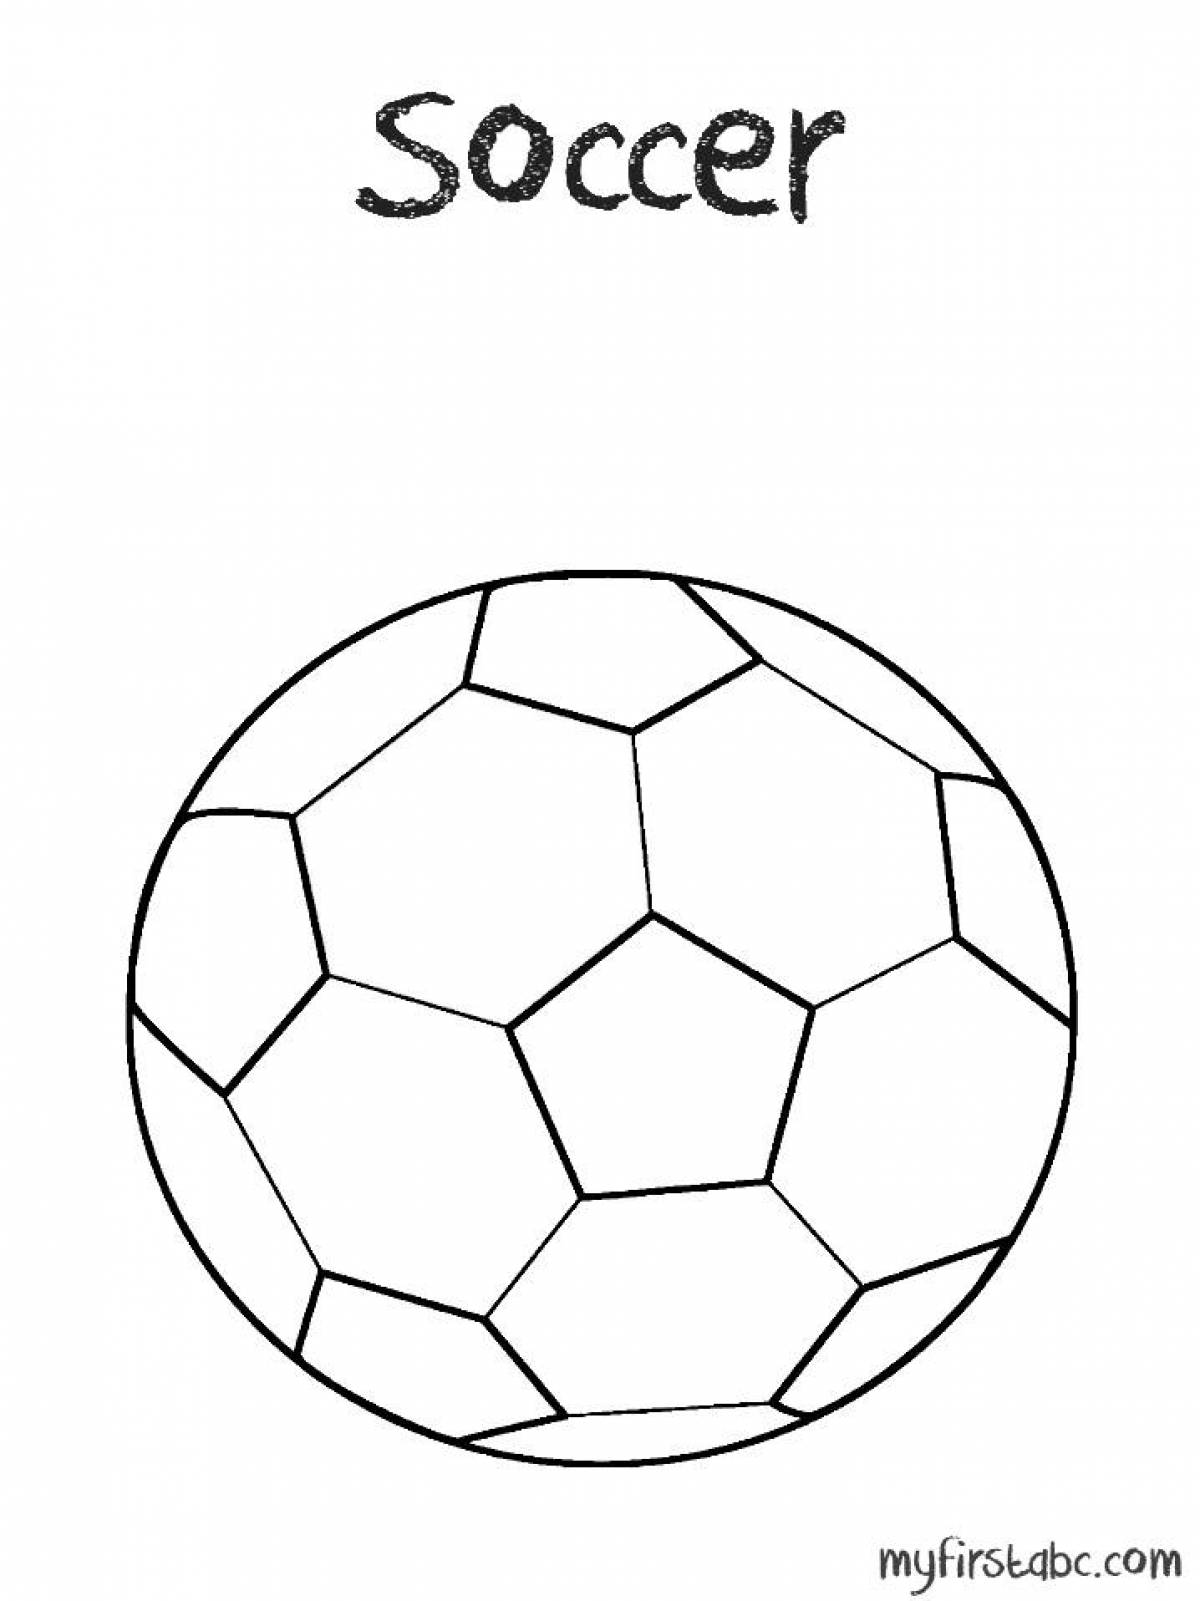 Coloring page joyful soccer ball